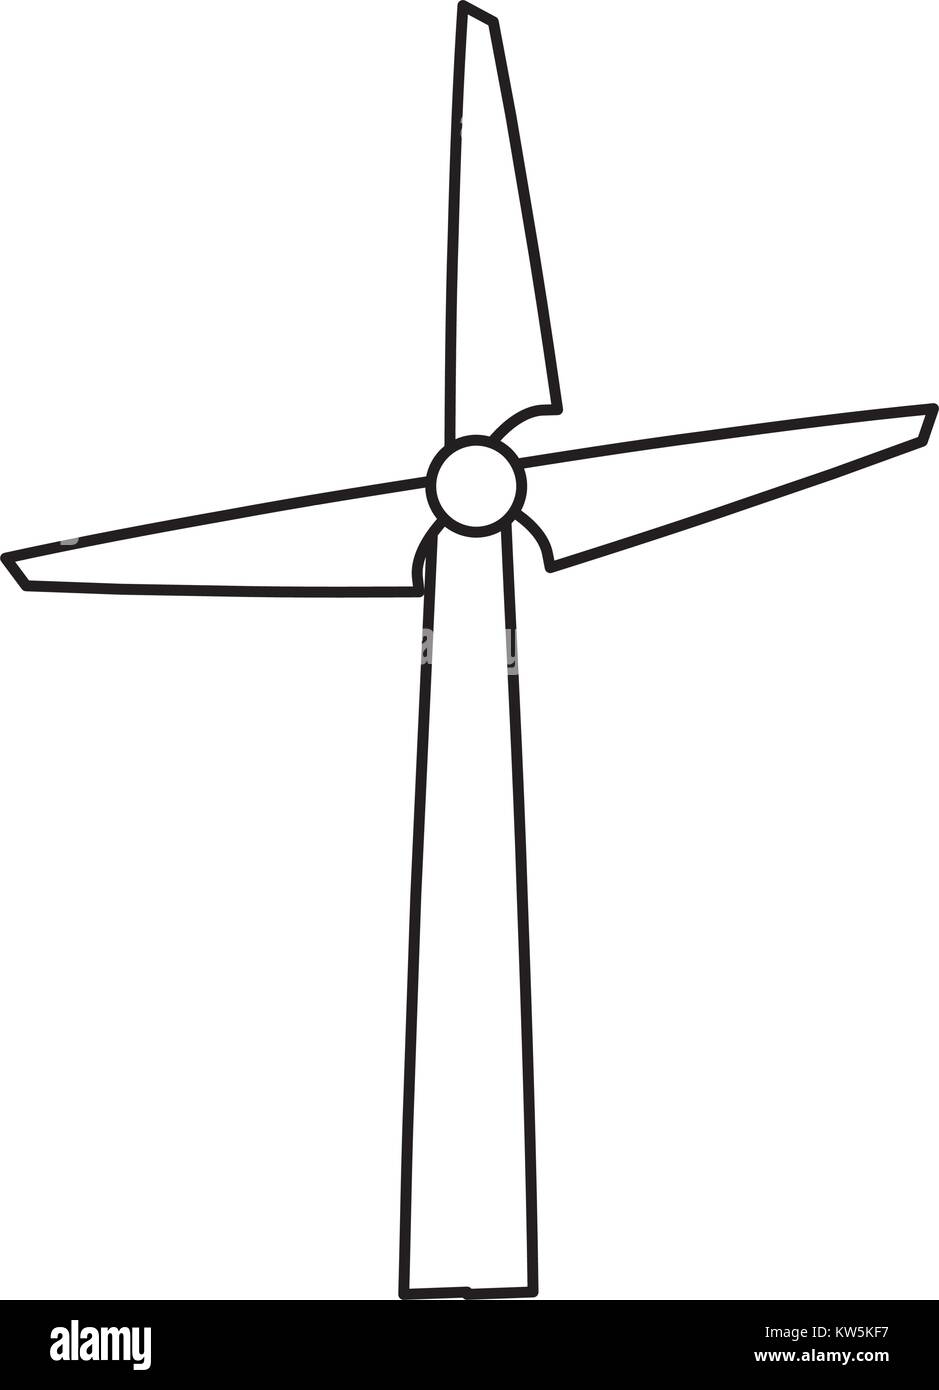 Wind turbine energy cartoon Stock Vector Image & Art - Alamy